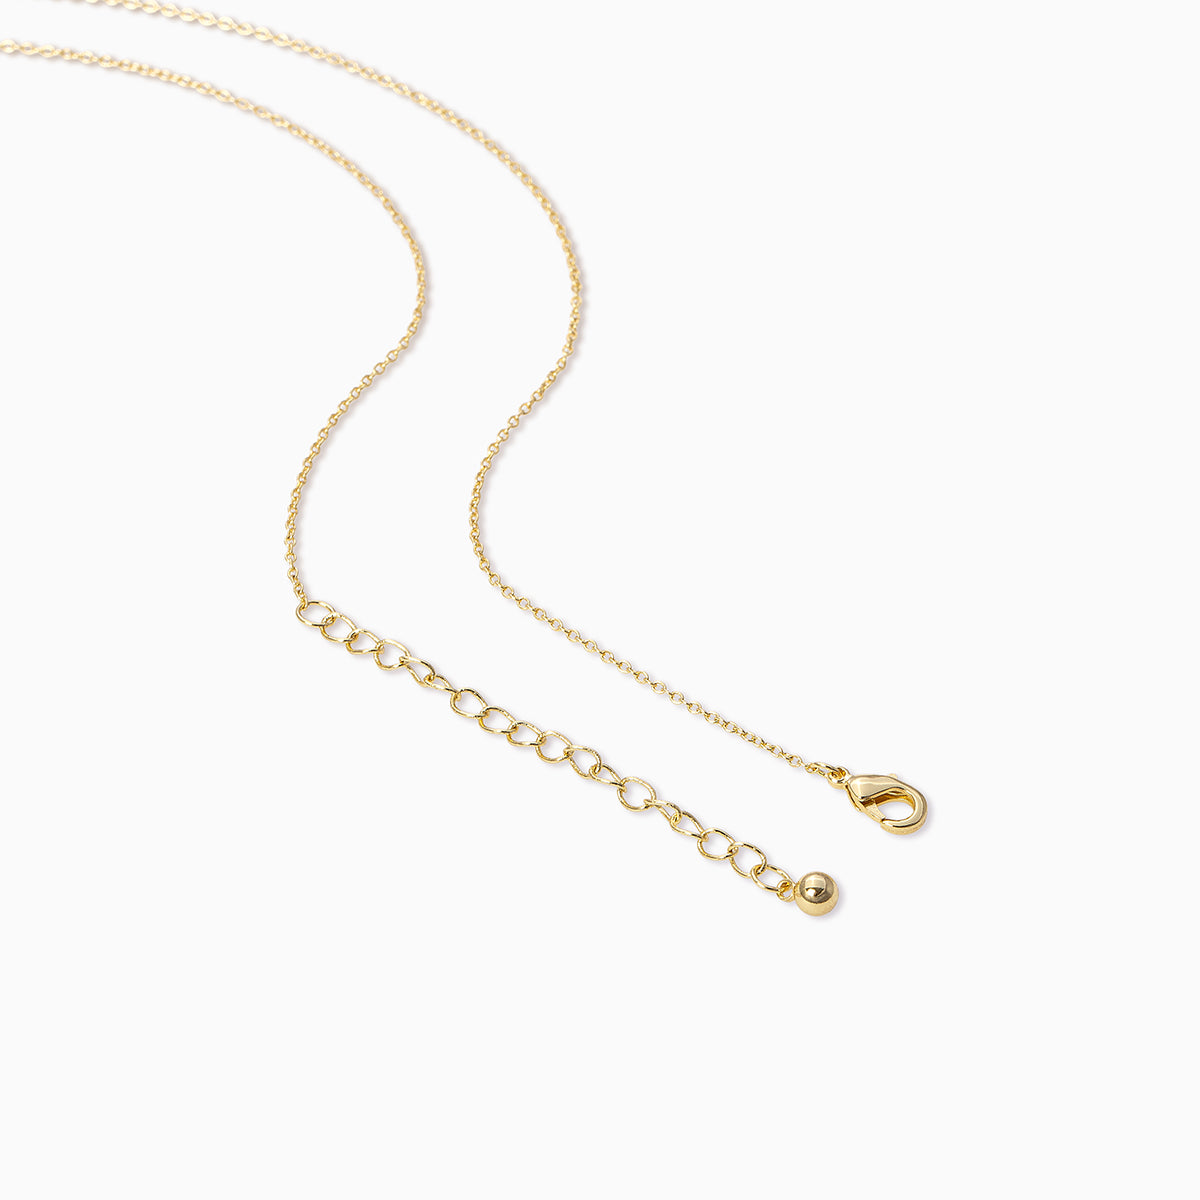 Leading Lady Pendant Necklace | Gold | Product Detail Image 2 | Uncommon James